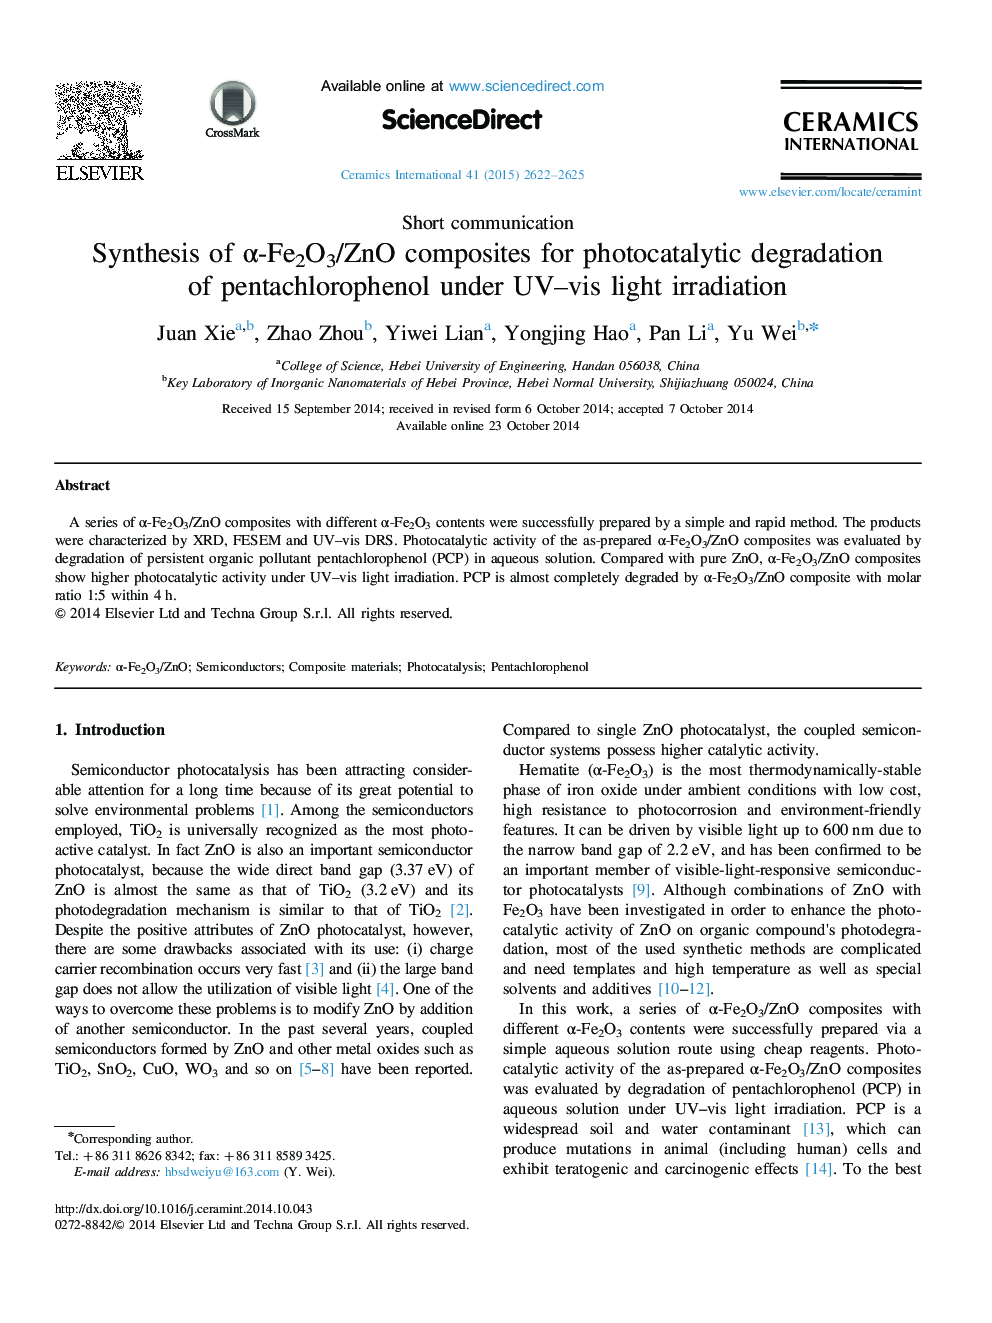 Synthesis of α-Fe2O3/ZnO composites for photocatalytic degradation of pentachlorophenol under UV–vis light irradiation